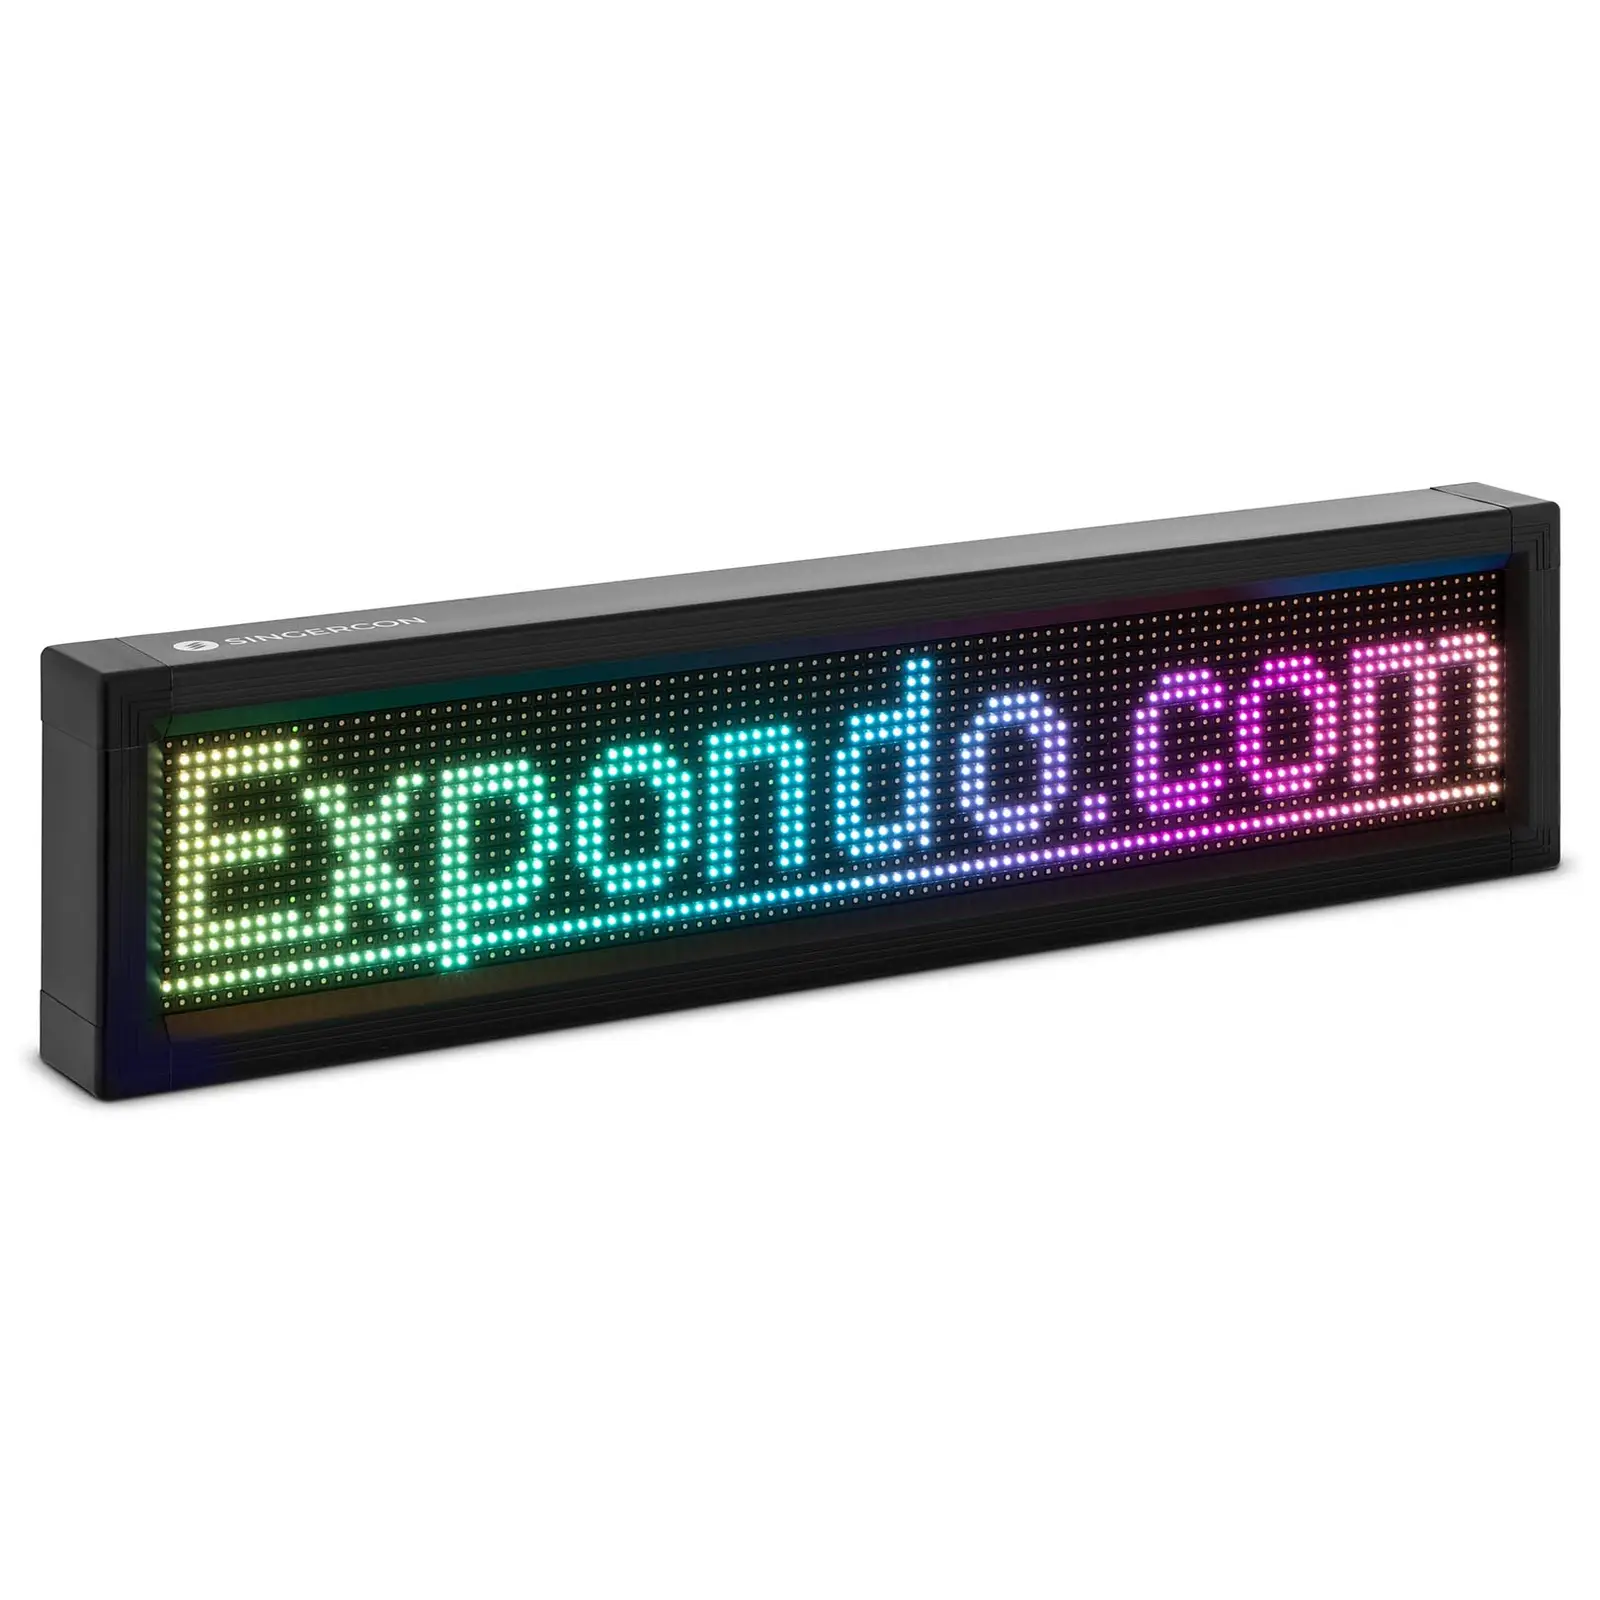 LED-mainostaulu - 96 x 16 värillinen LED -valo - 67 x 19 cm - iOS-/Android-ohjattavissa